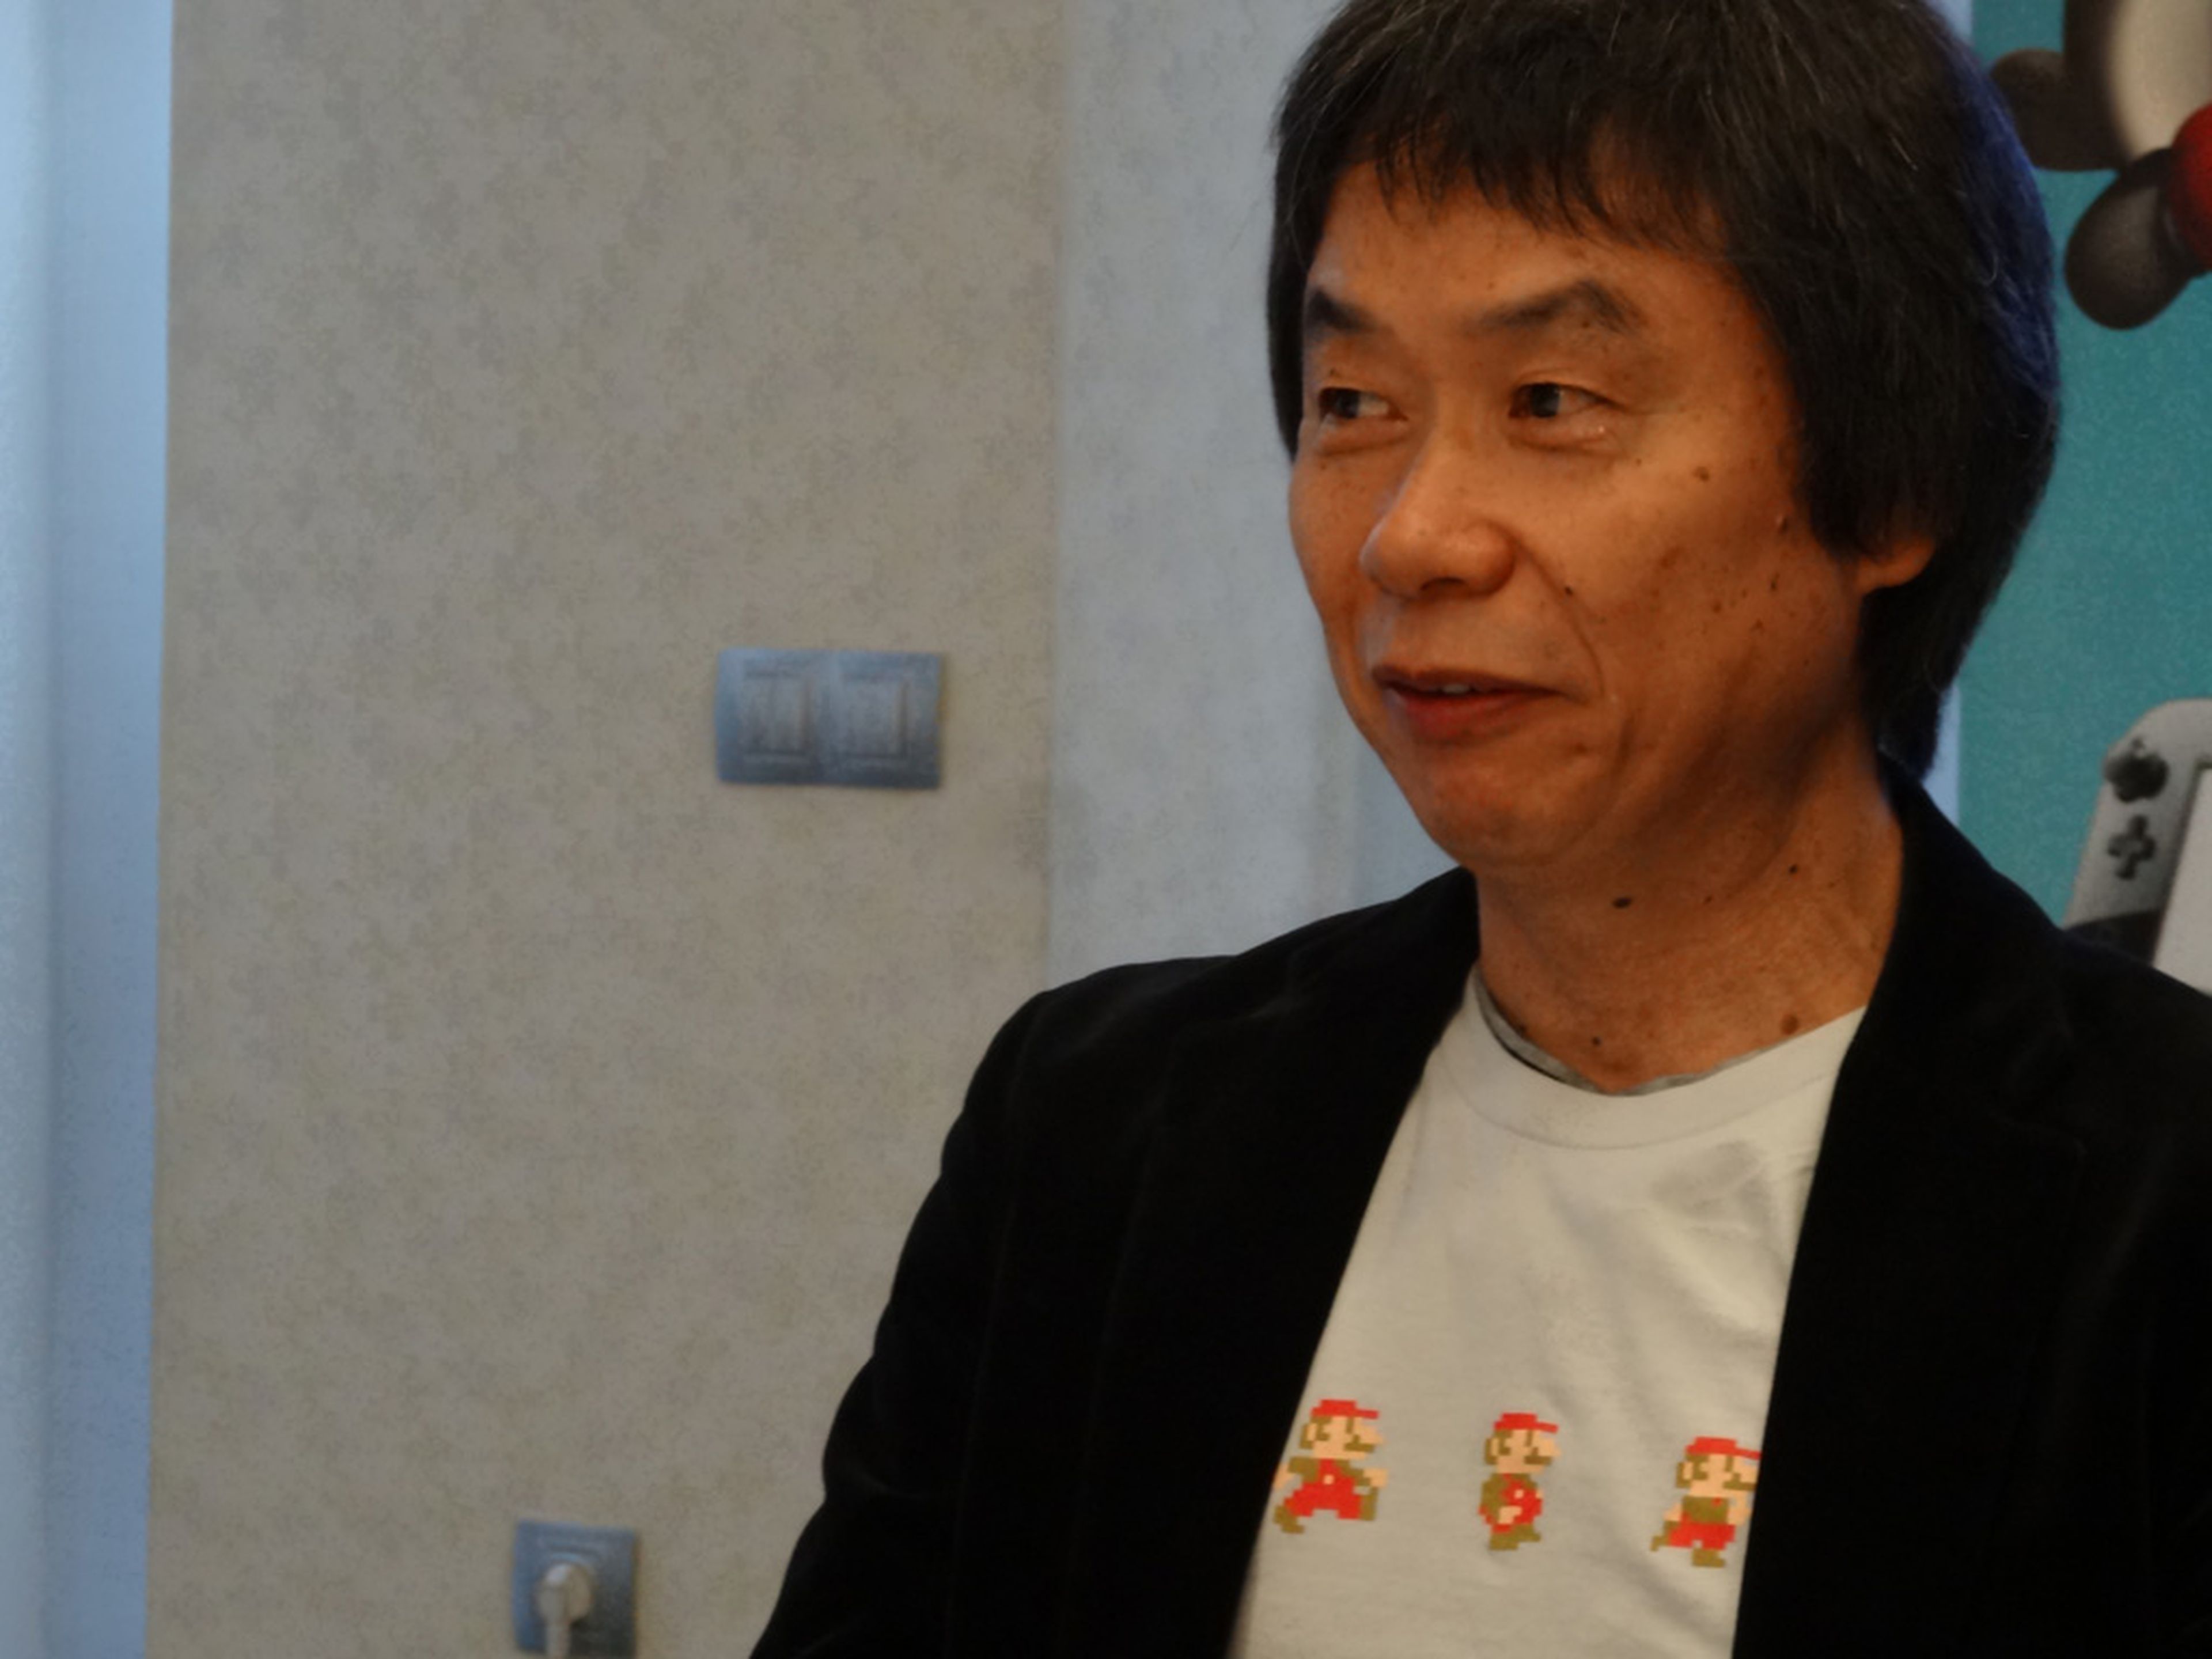 Entrevistamos al maestro: Shigeru Miyamoto